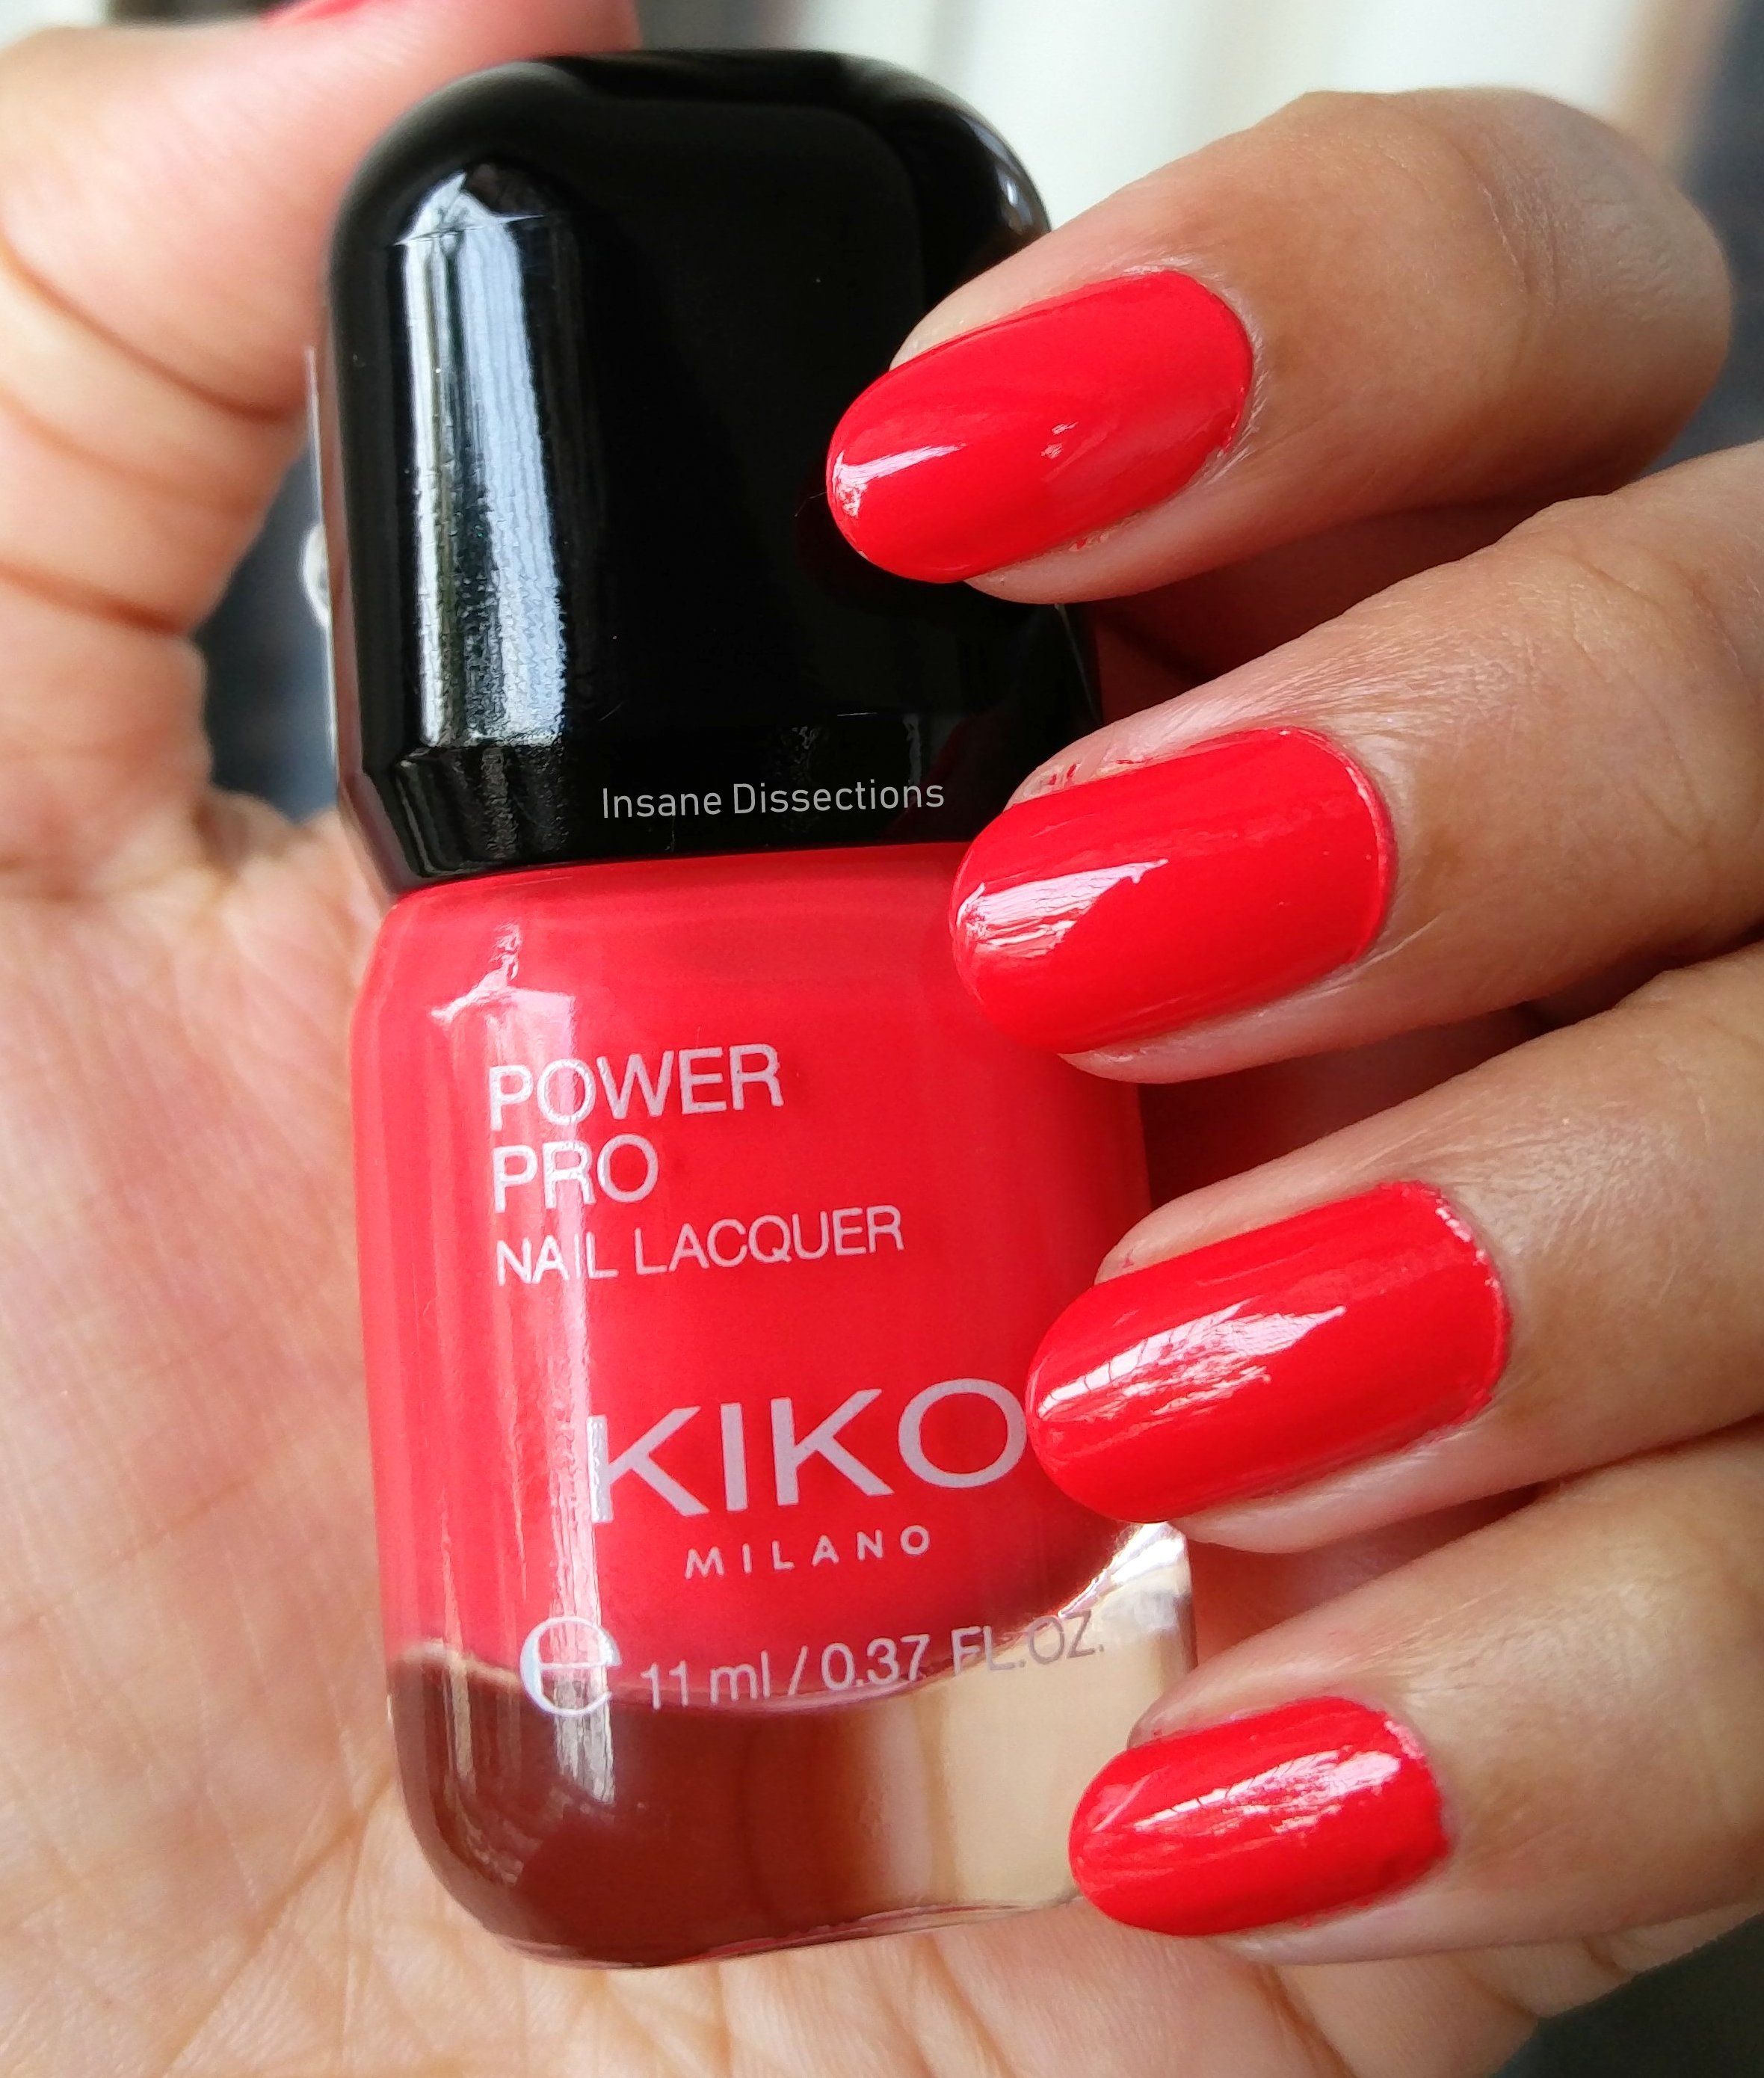 Professional-finish nail polish - Power Pro Nail Lacquer - KIKO MILANO